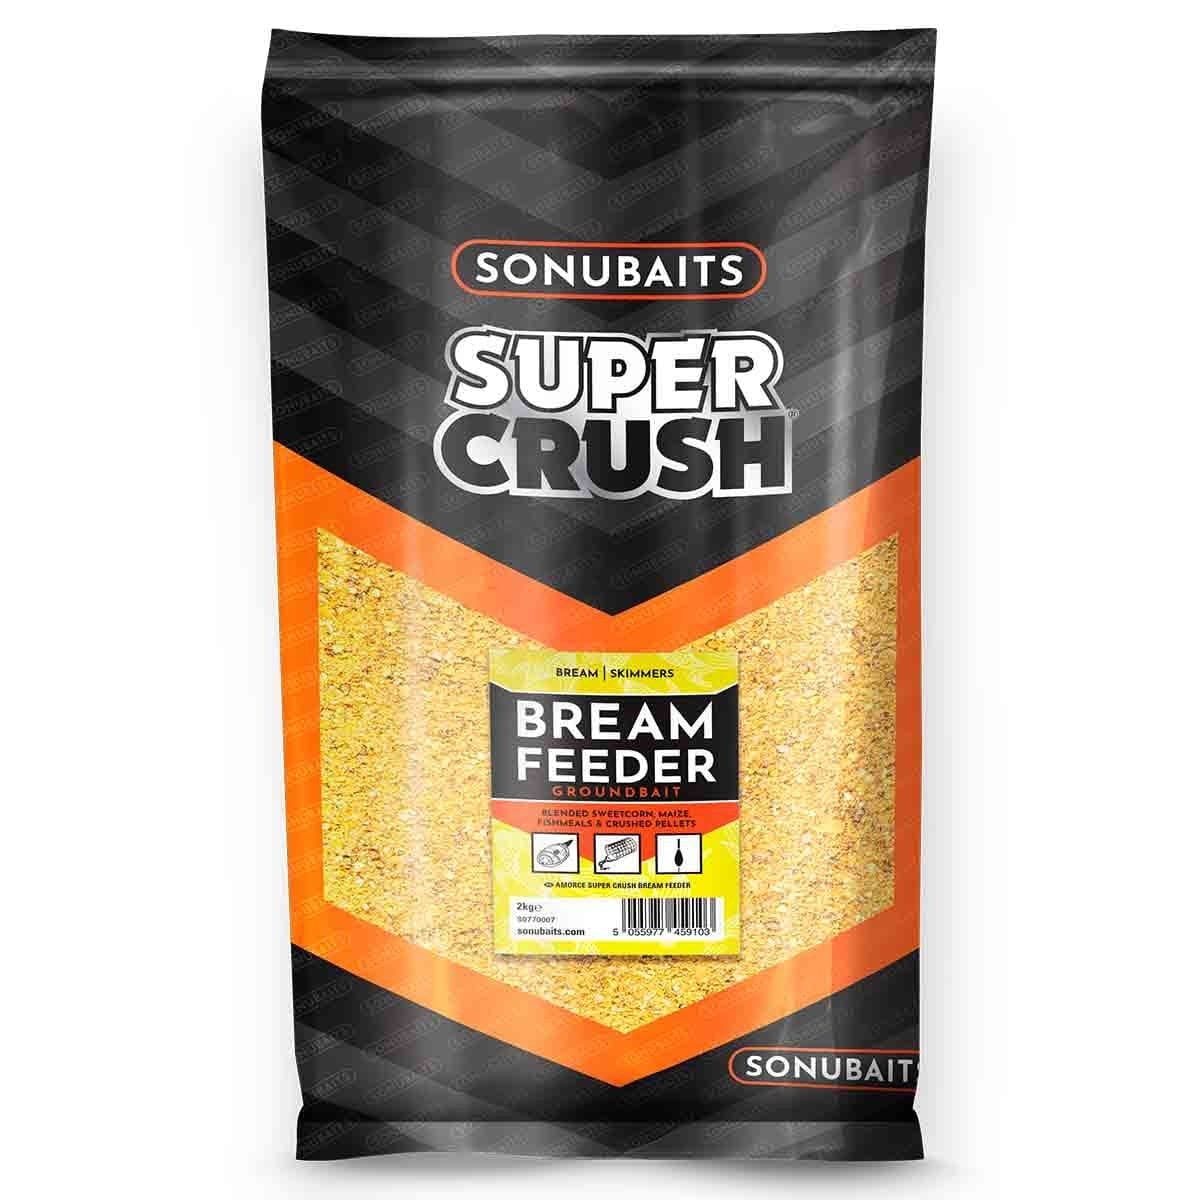 Sonubaits Super Crush Bream Feeder (2kg).